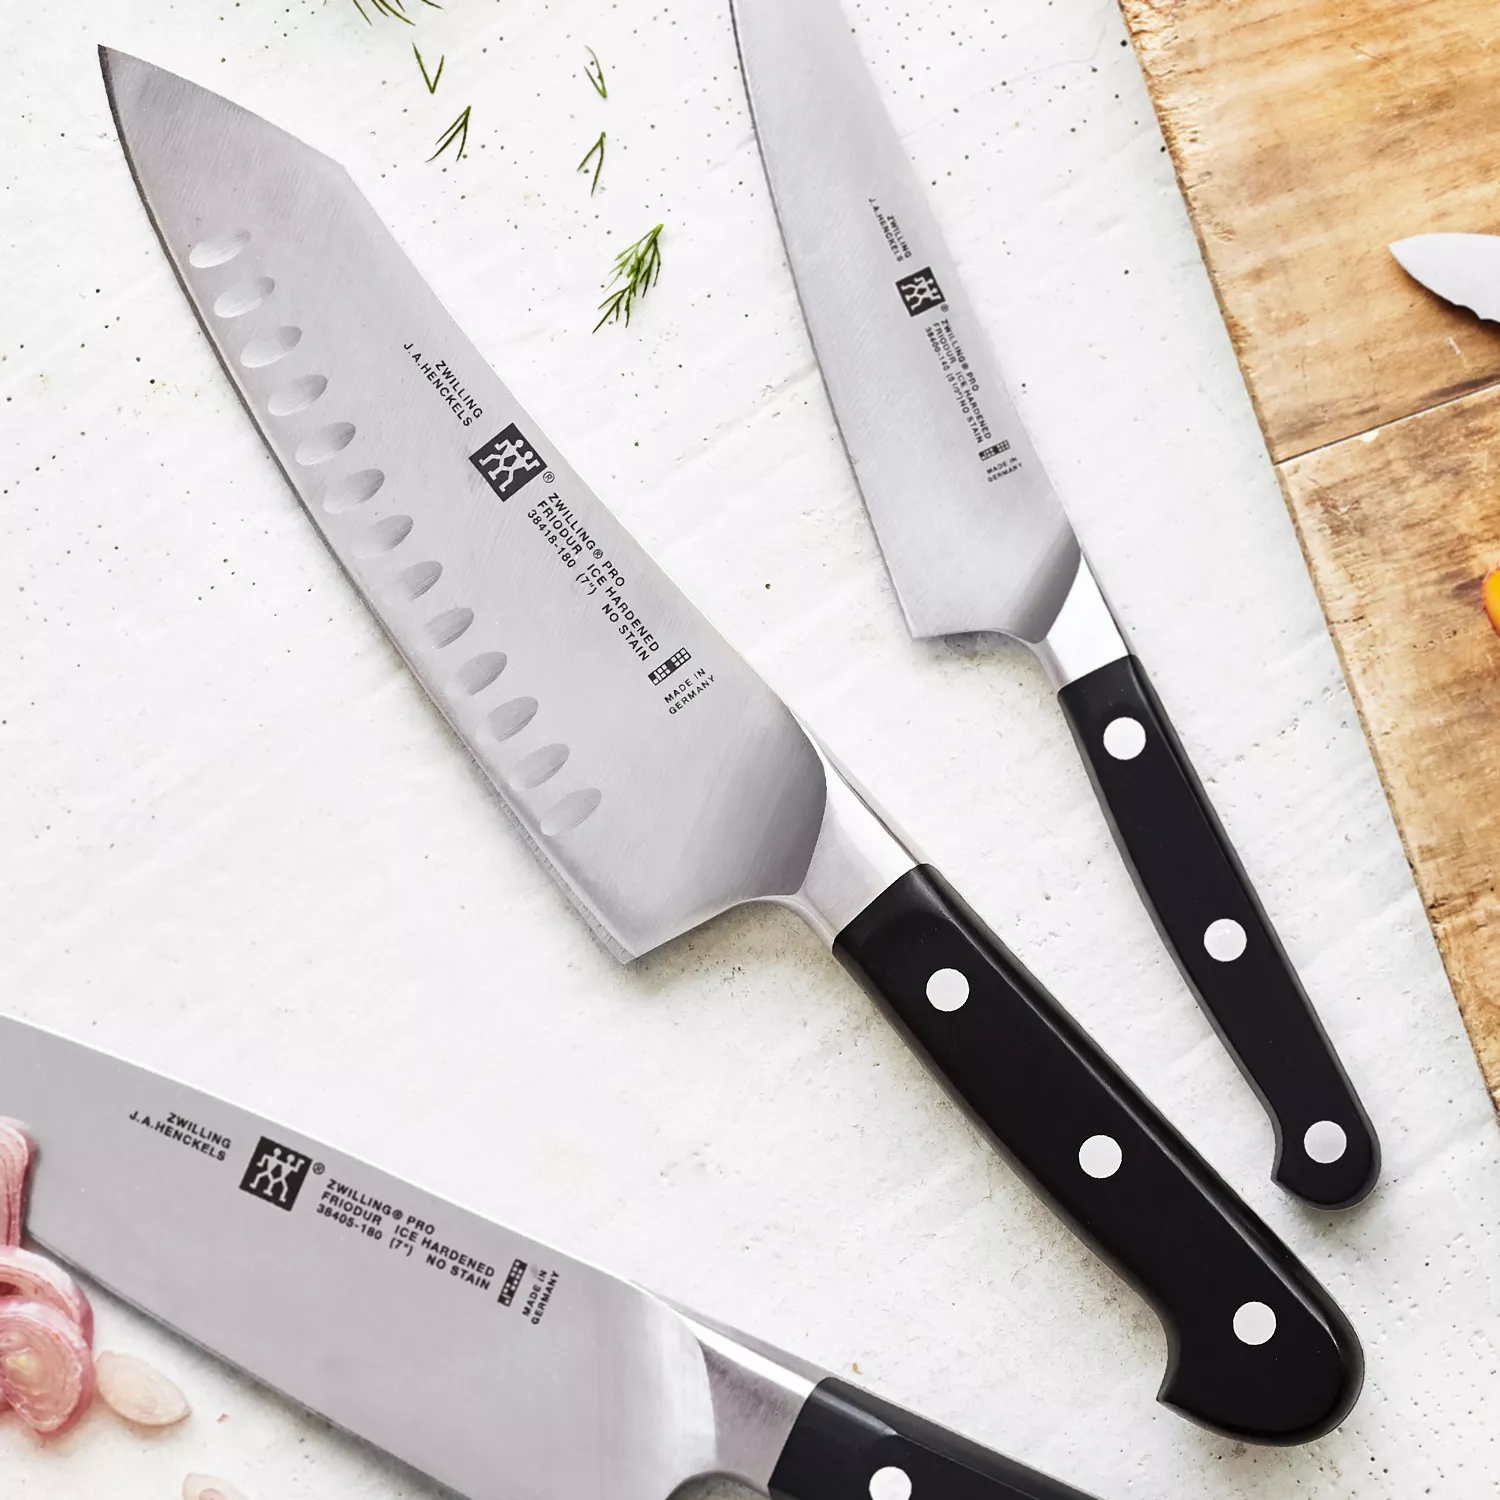 Zwilling Pro 7-inch Chef's & Rocking Santoku Knife Set